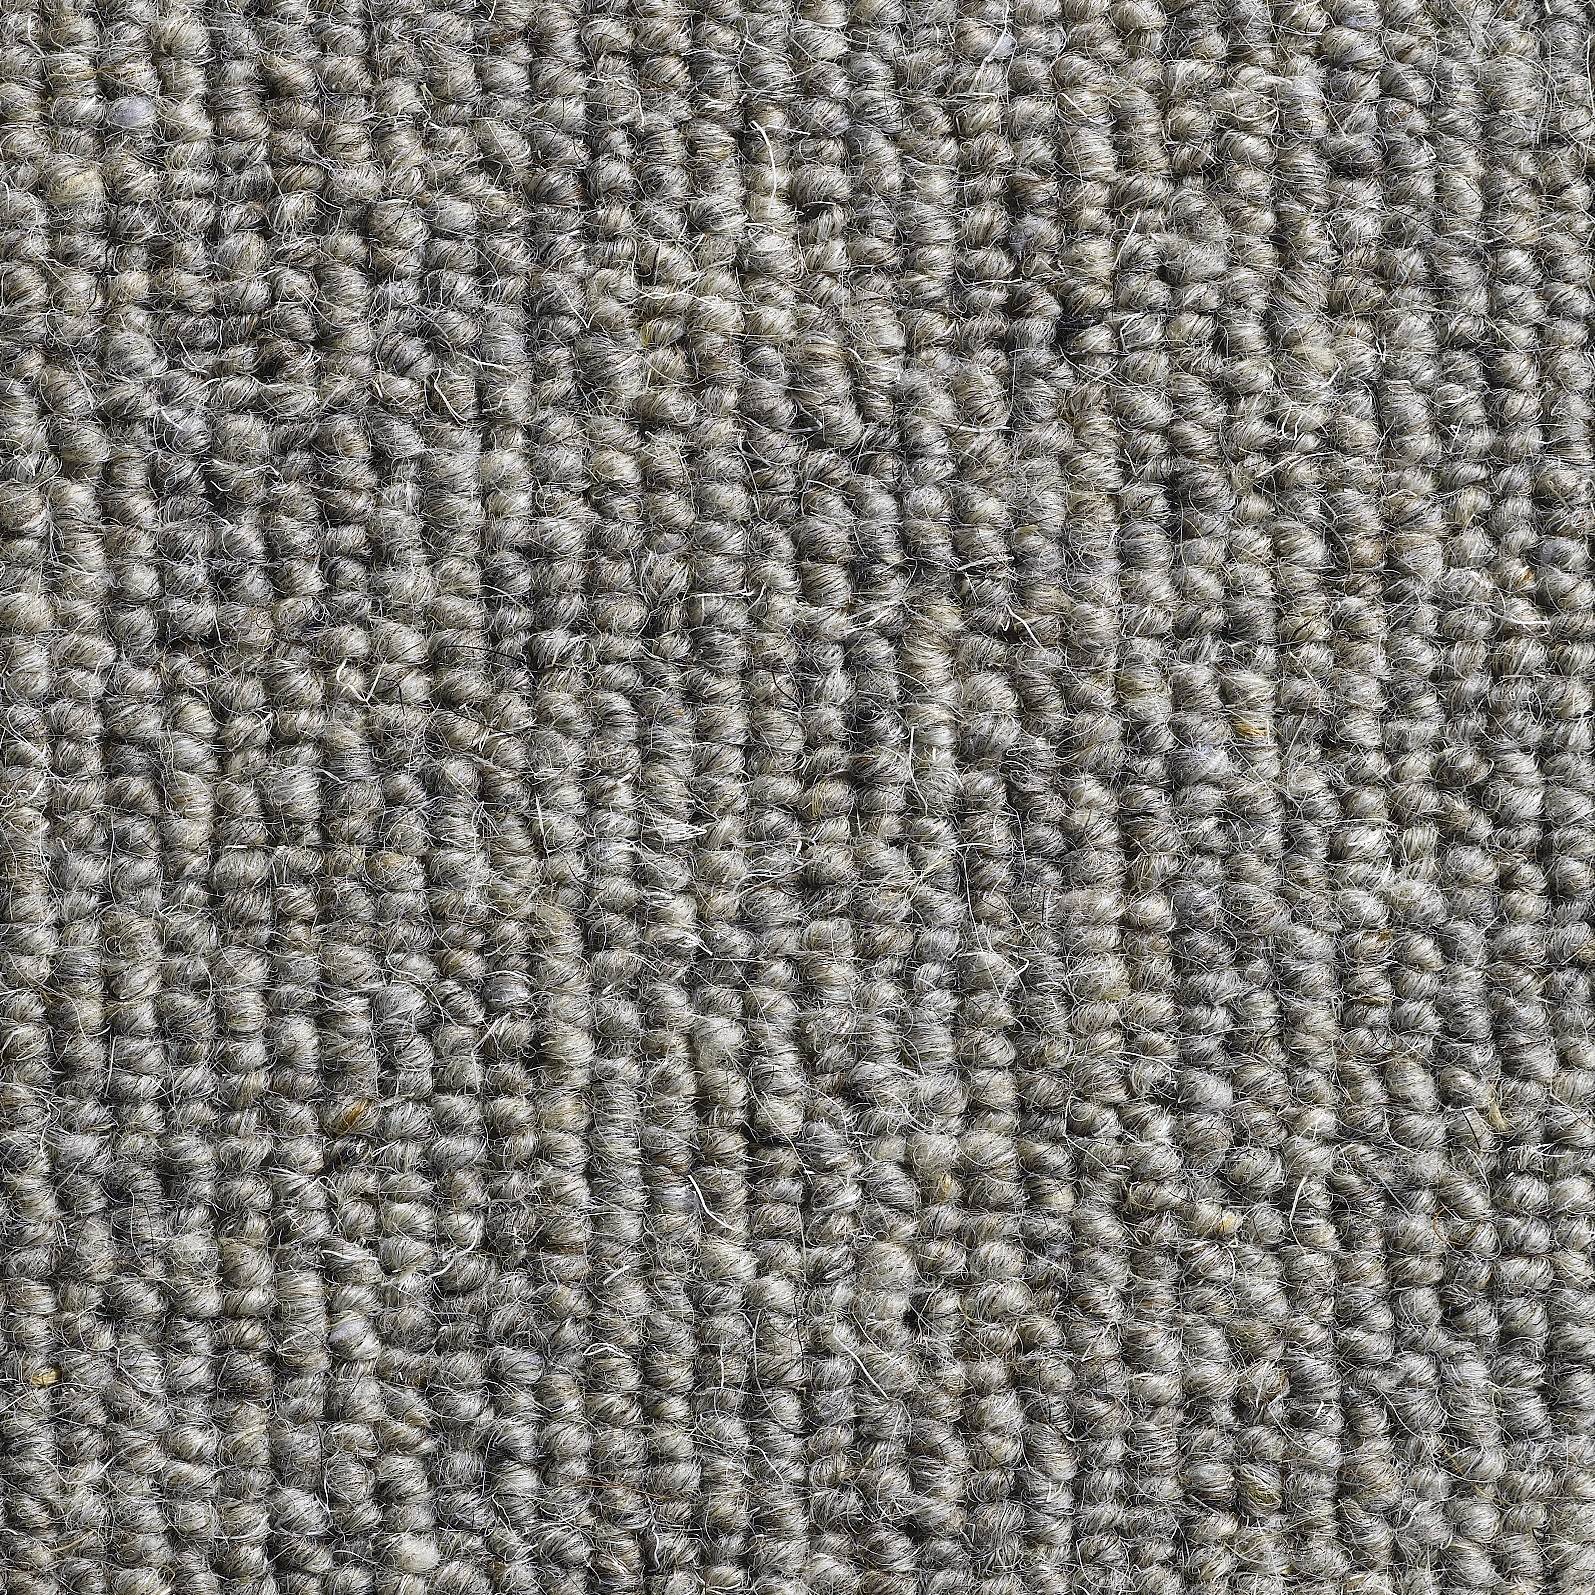 Madrid 276 grå - web uld tæppe